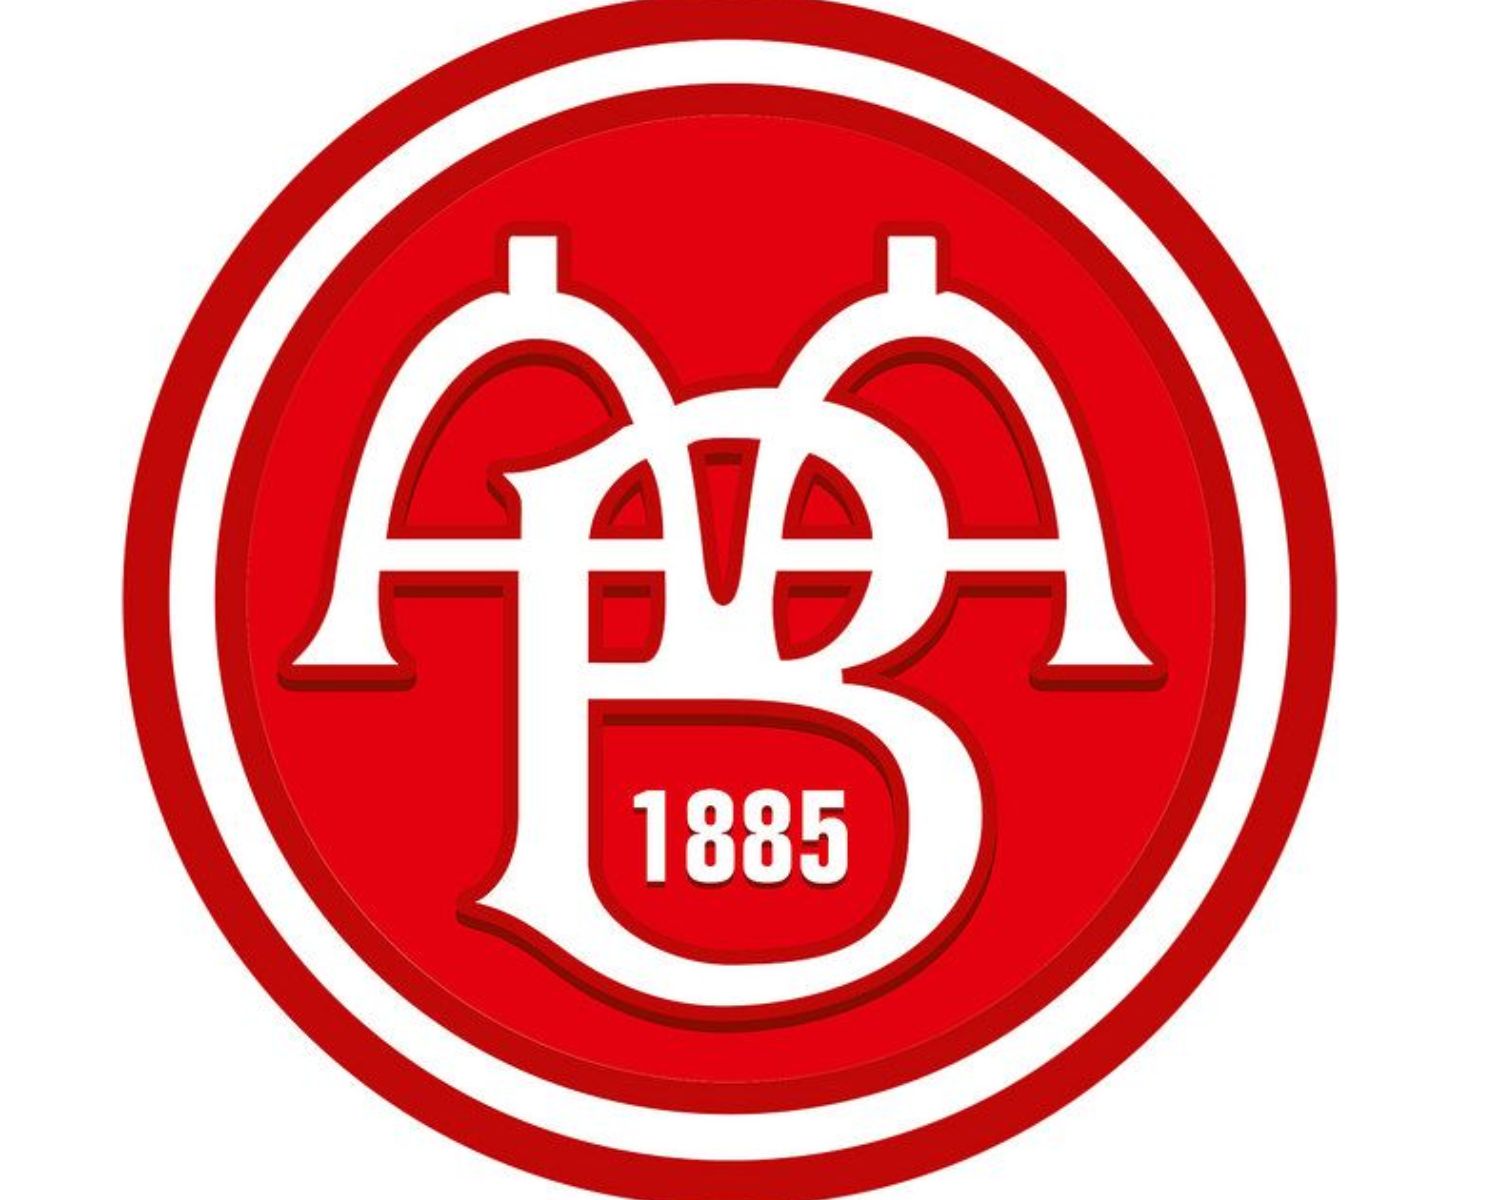 aalborg-bk-12-football-club-facts